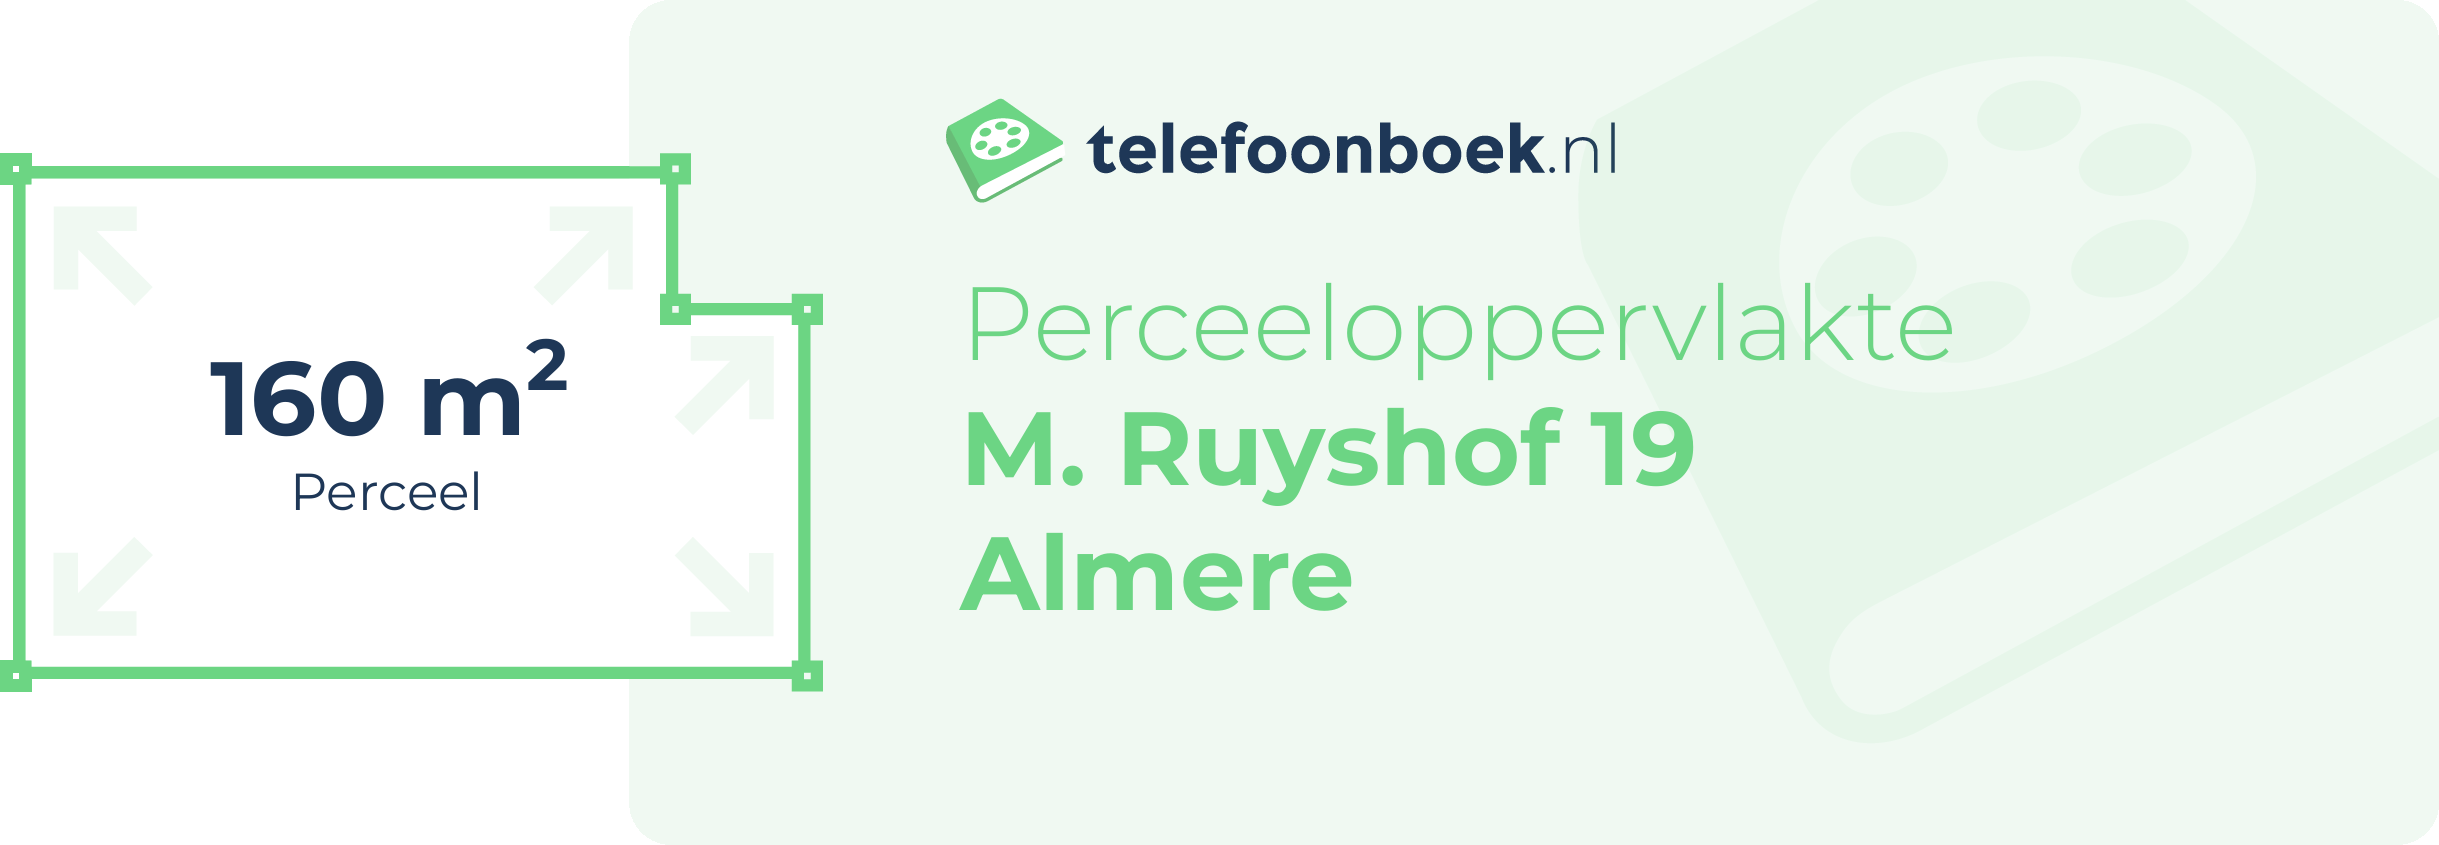 Perceeloppervlakte M. Ruyshof 19 Almere